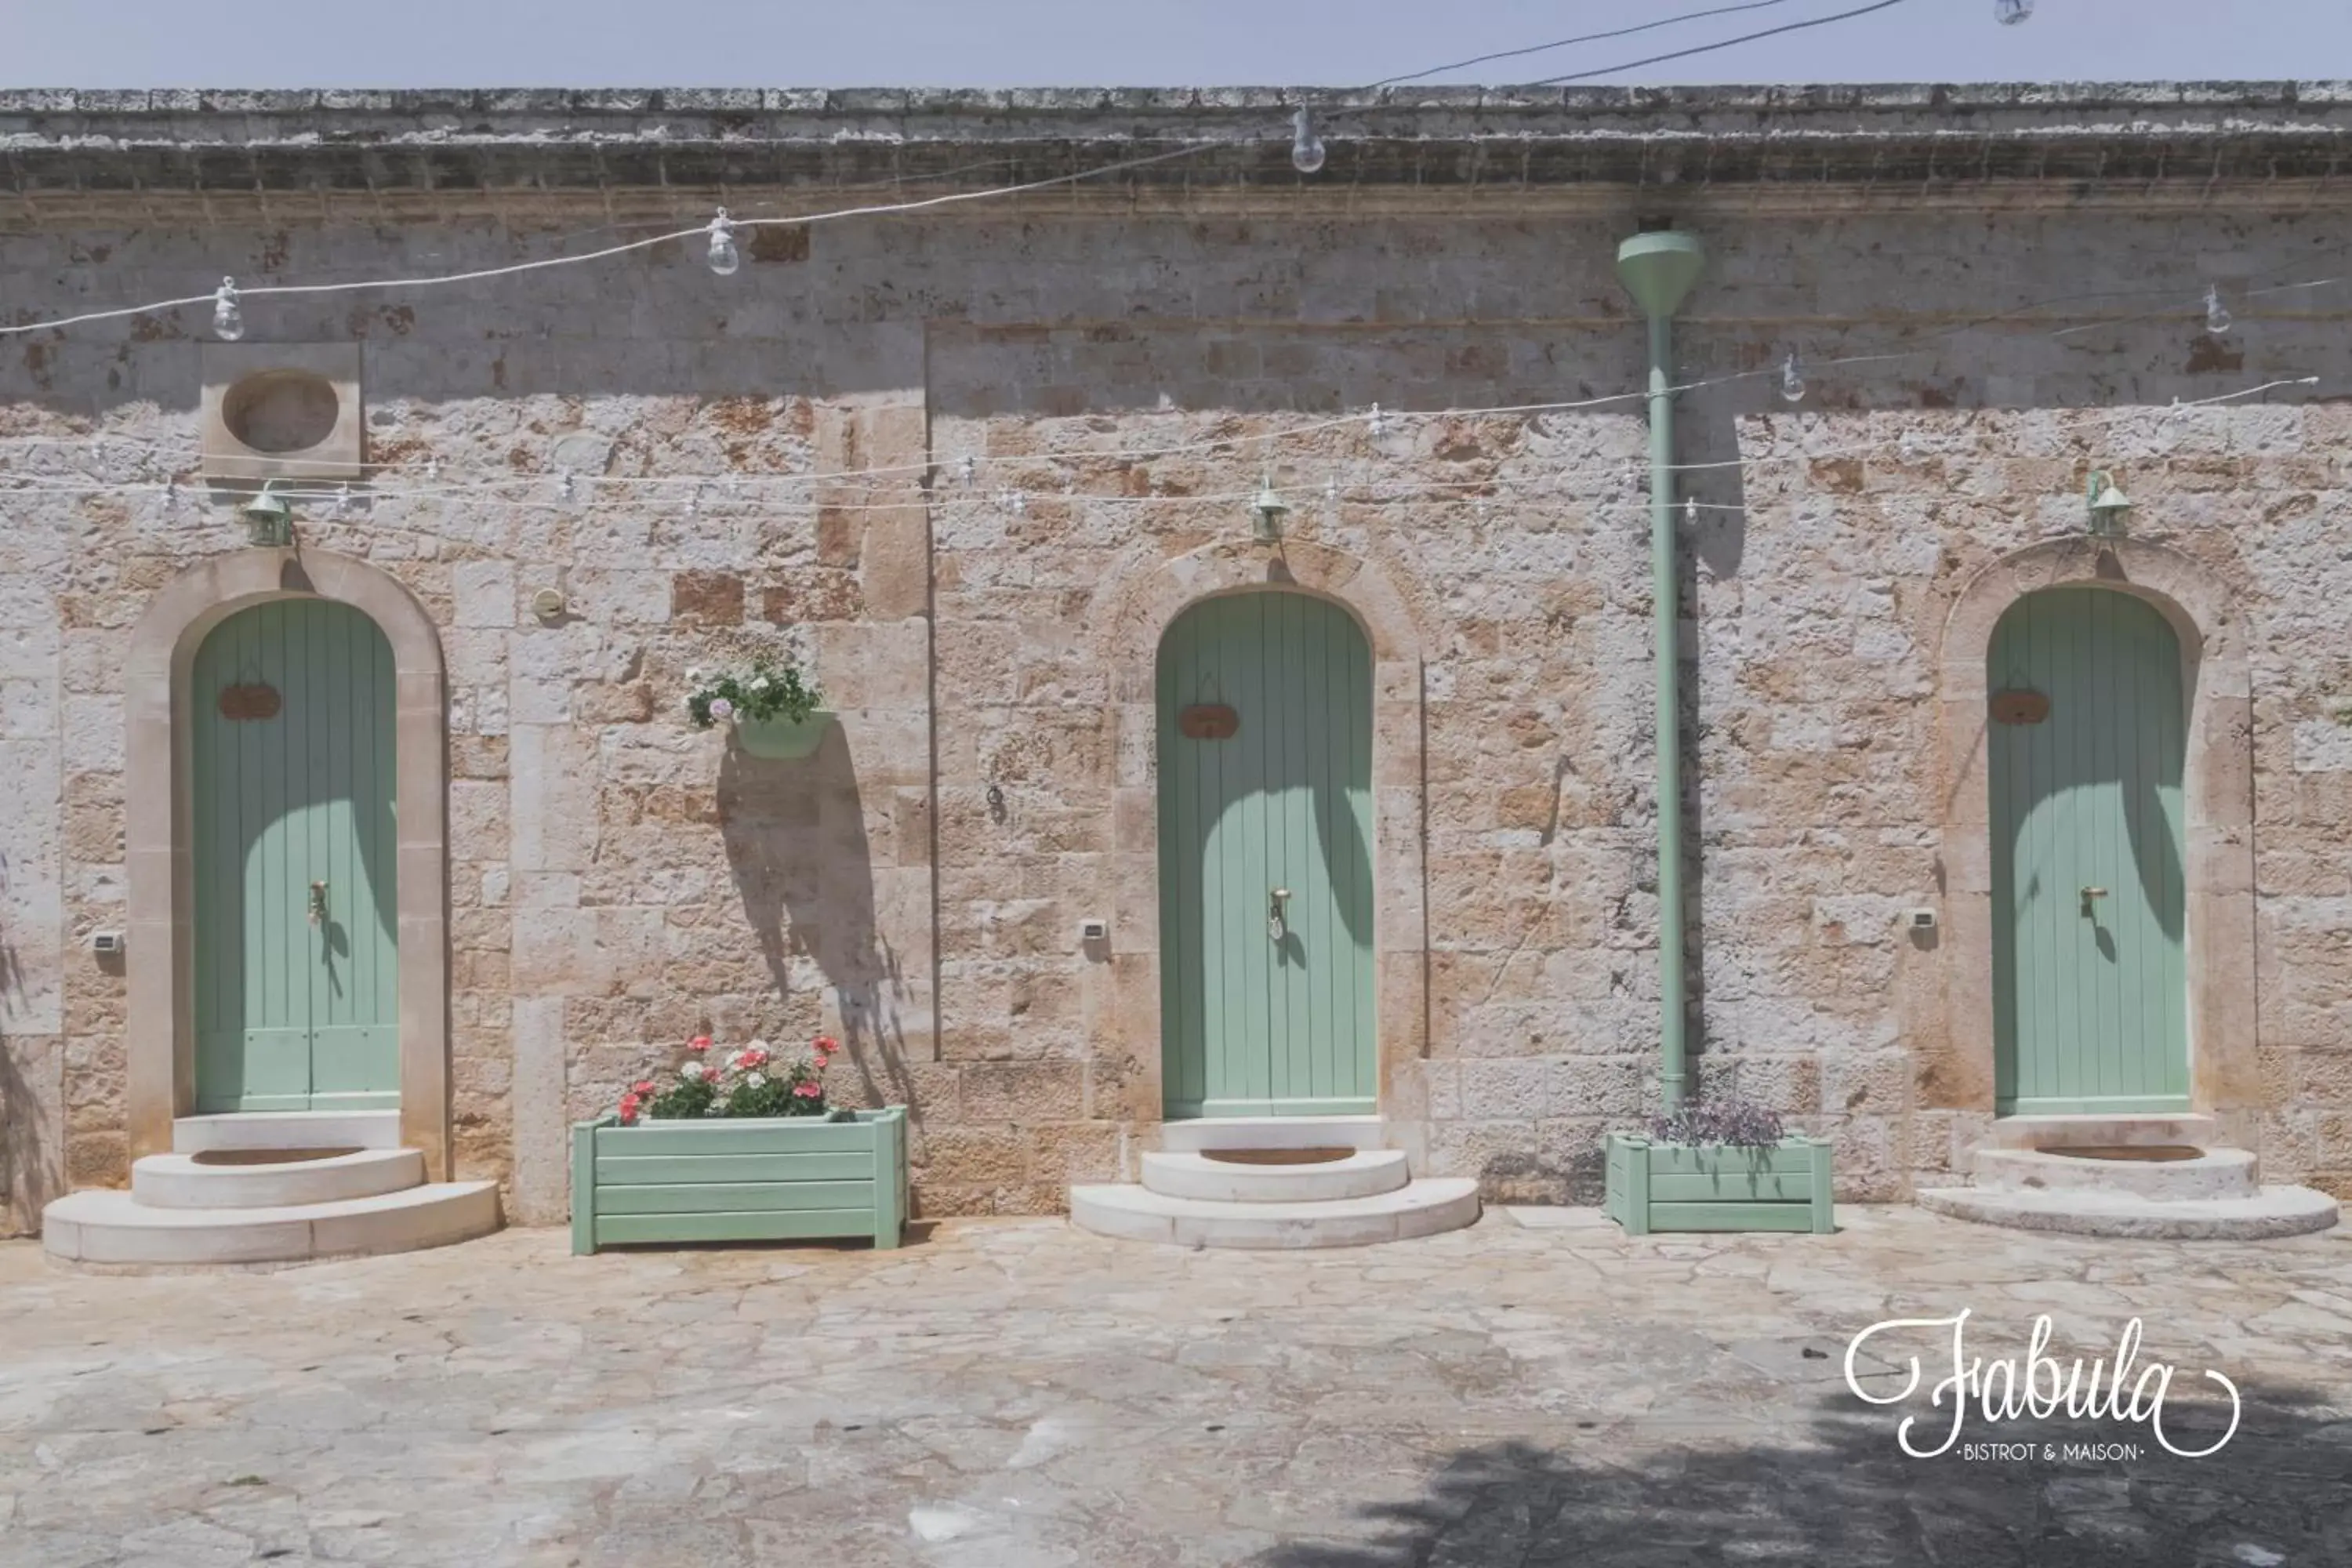 Facade/entrance in Masseria Fabula Bistrot & Maison